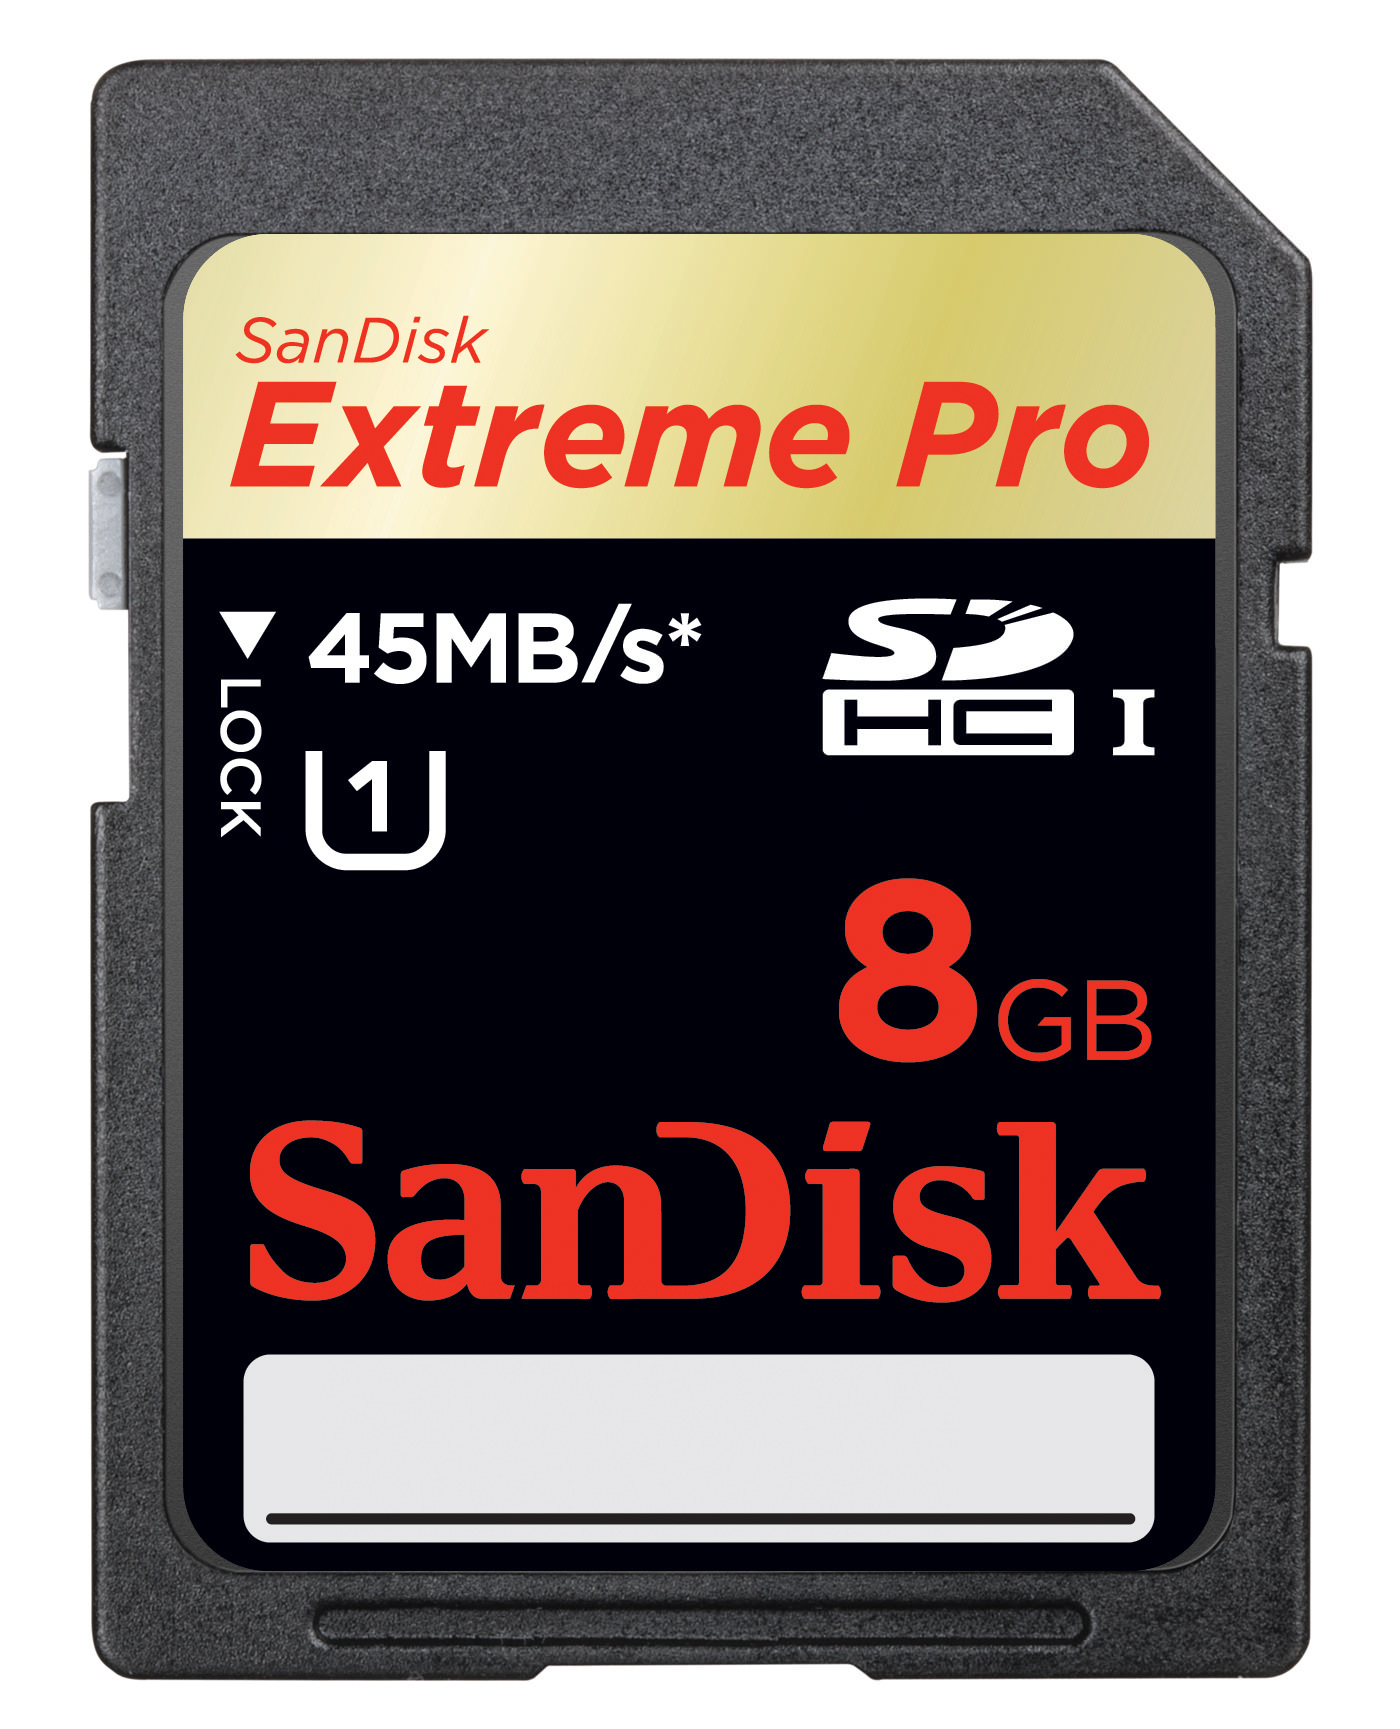 SanDisk Extreme Pro 8GB SDHC image 